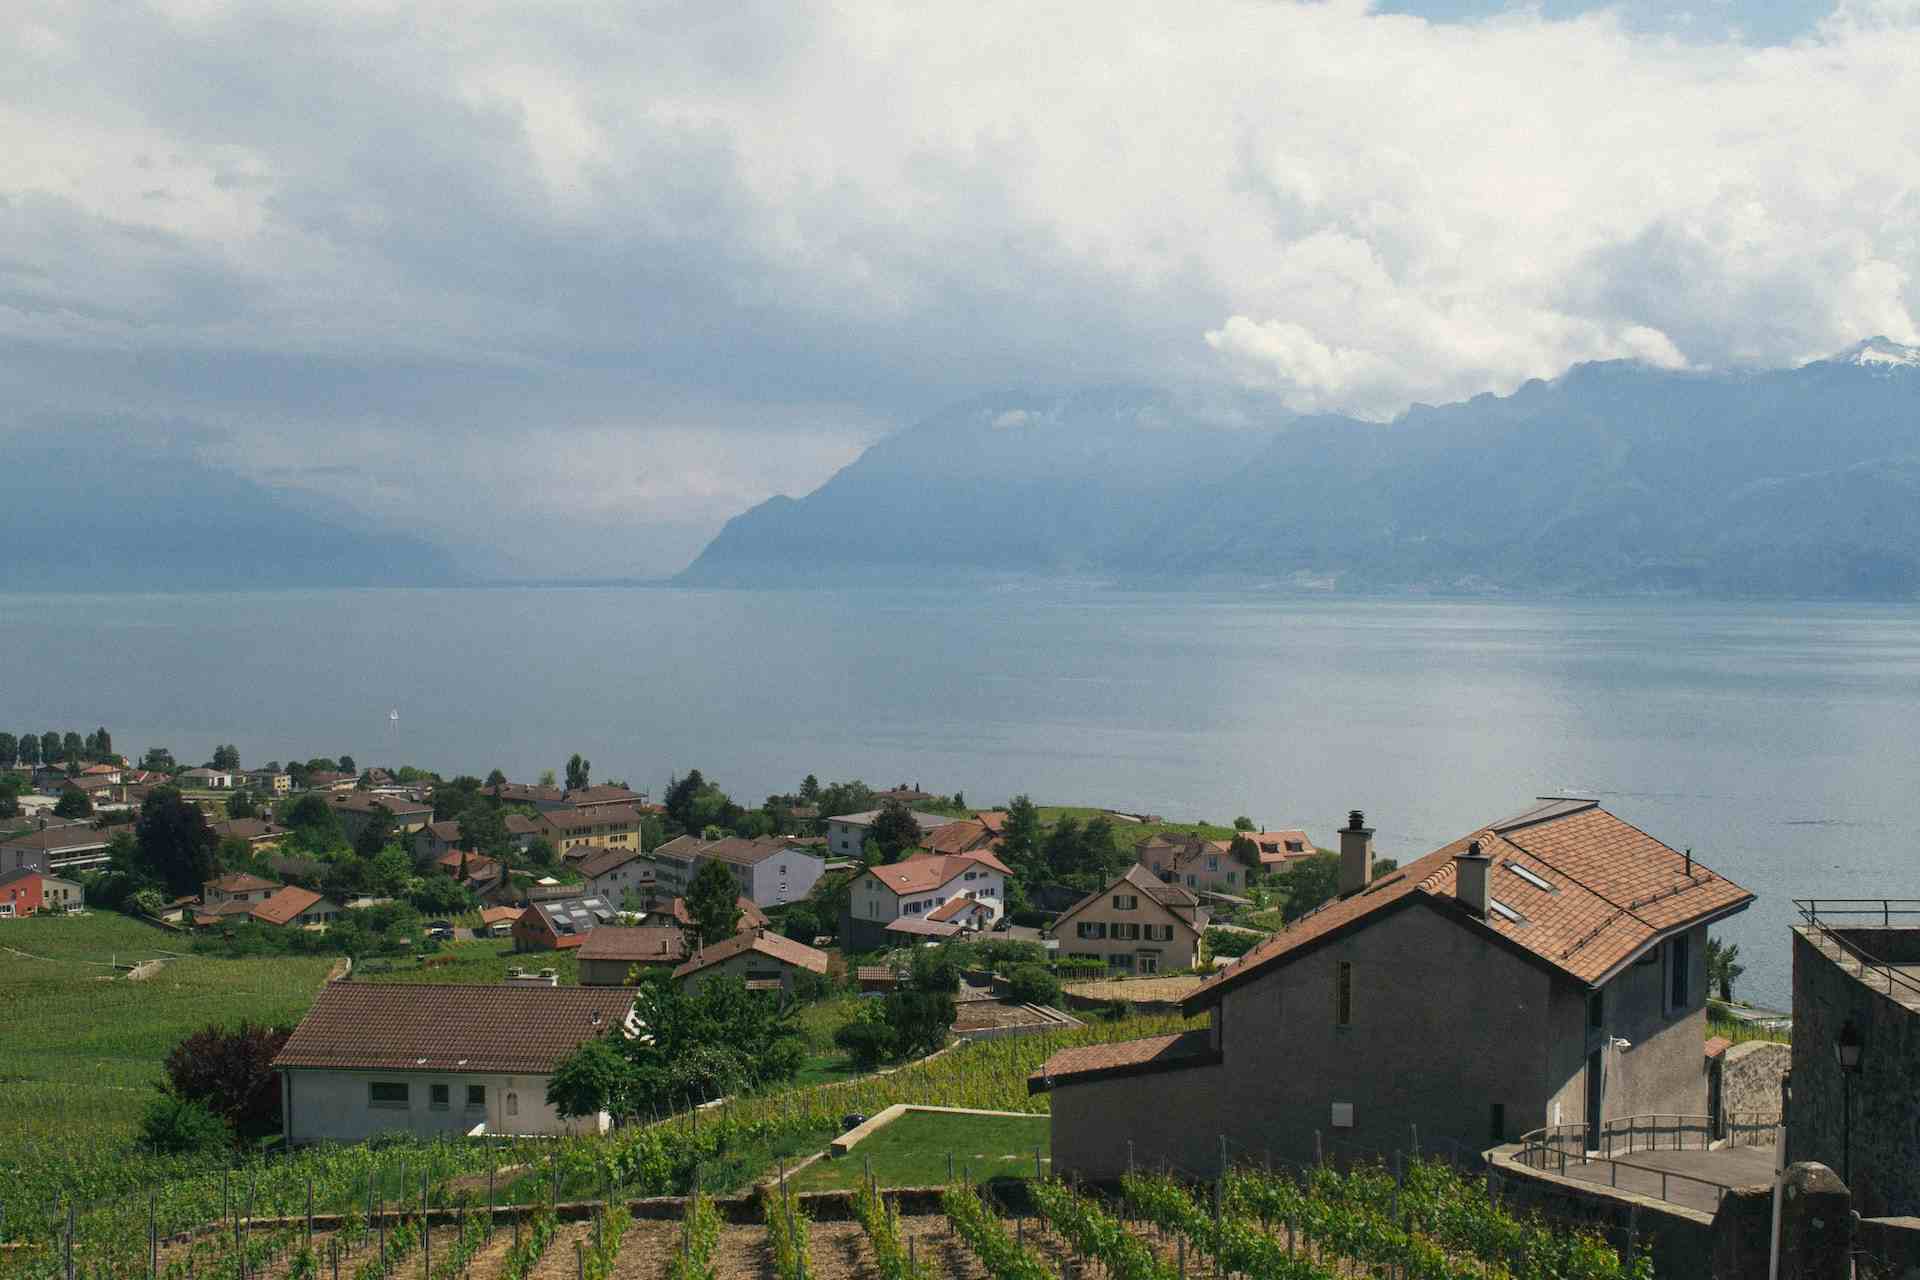 MBlondel, L'Esprit du Fruit, producer in Crissier canton of Vaud in Switzerland